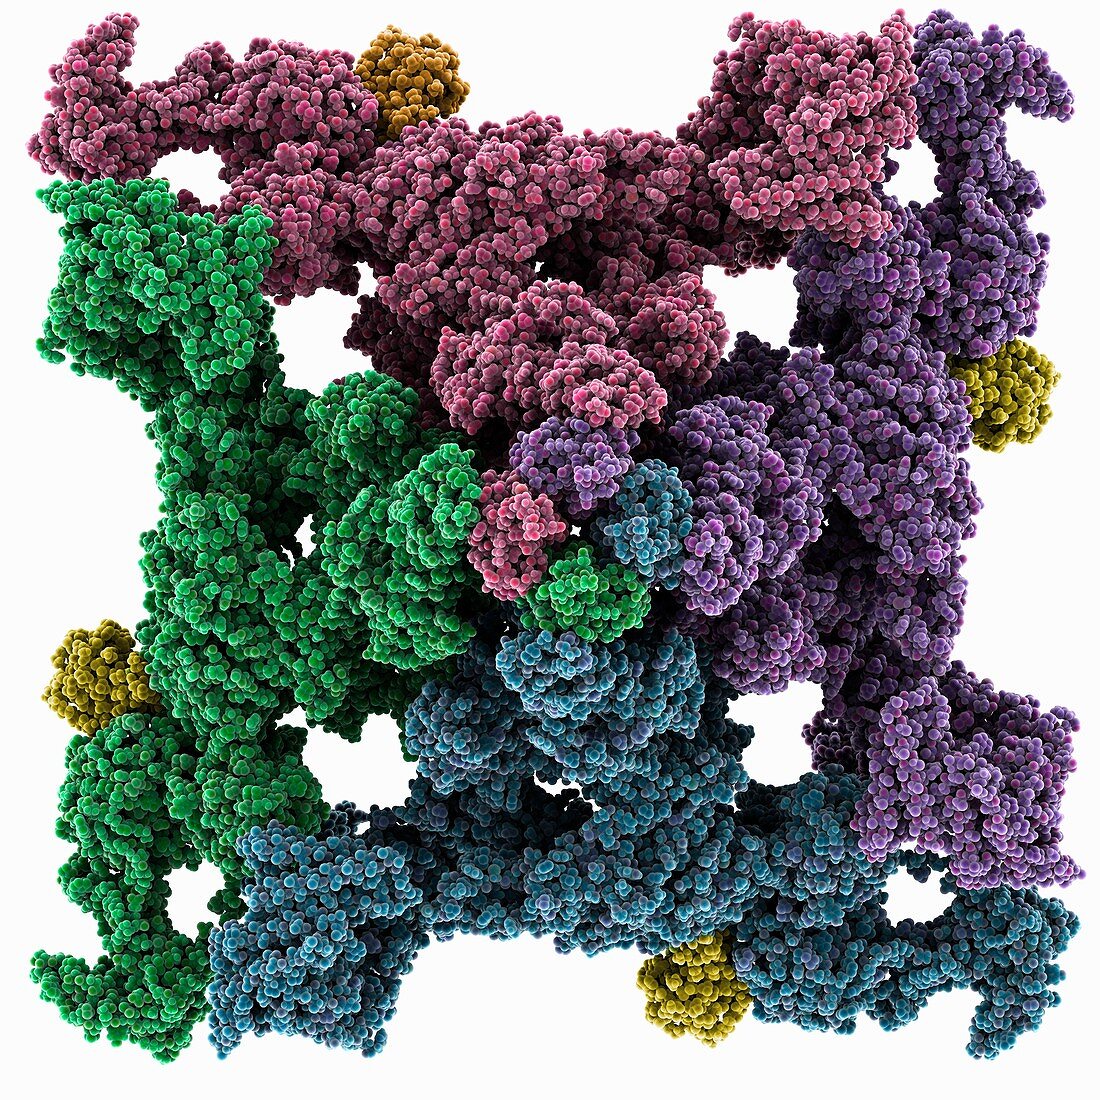 Ryanodine receptor complex, illustration